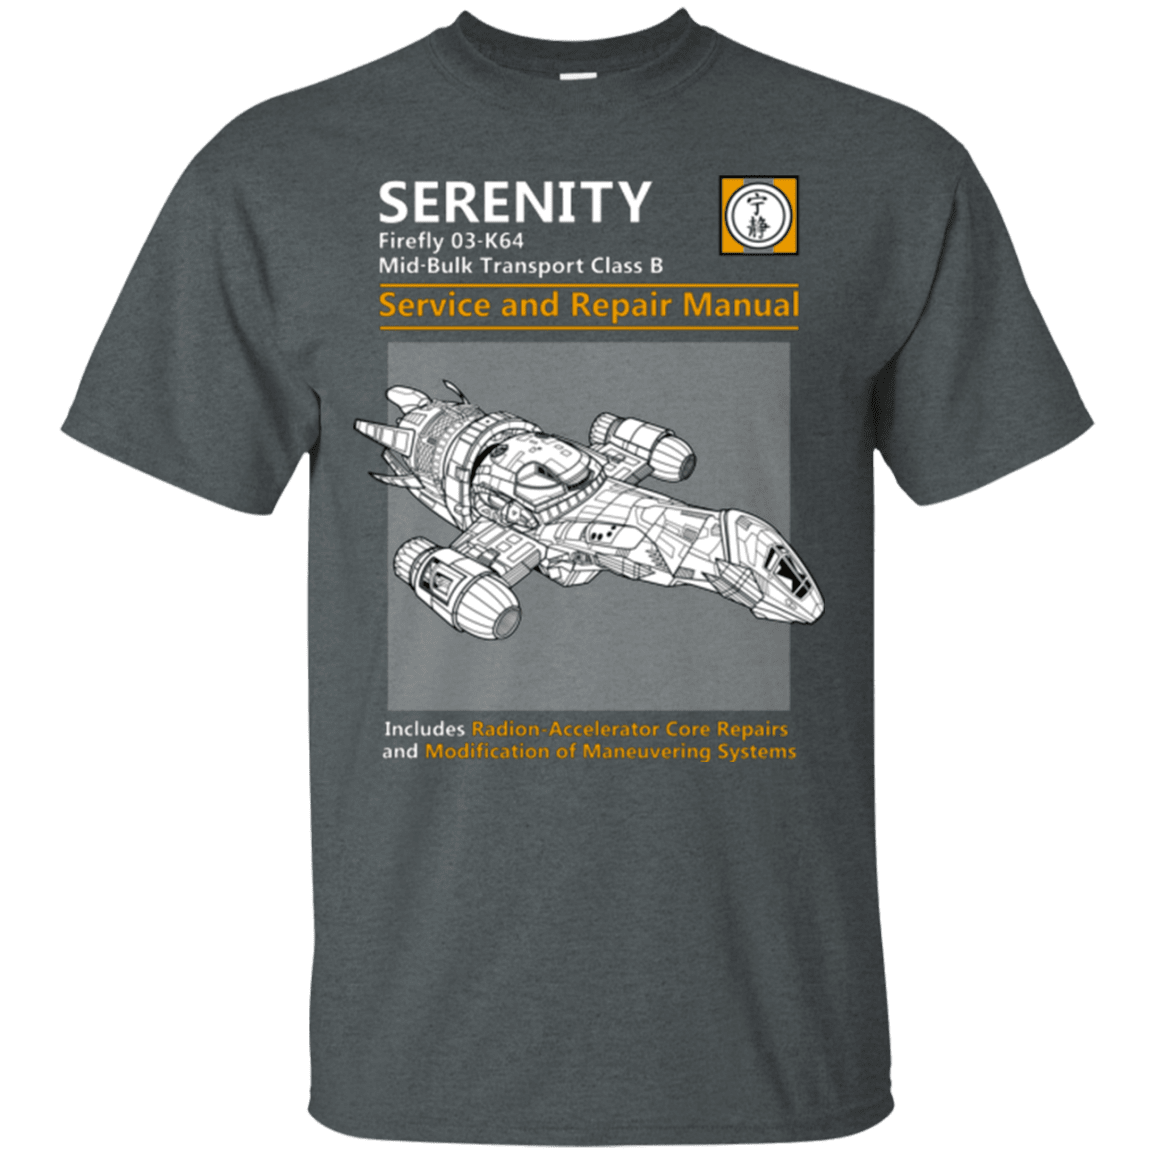 Serenity Service And Repair Manual T-Shirt